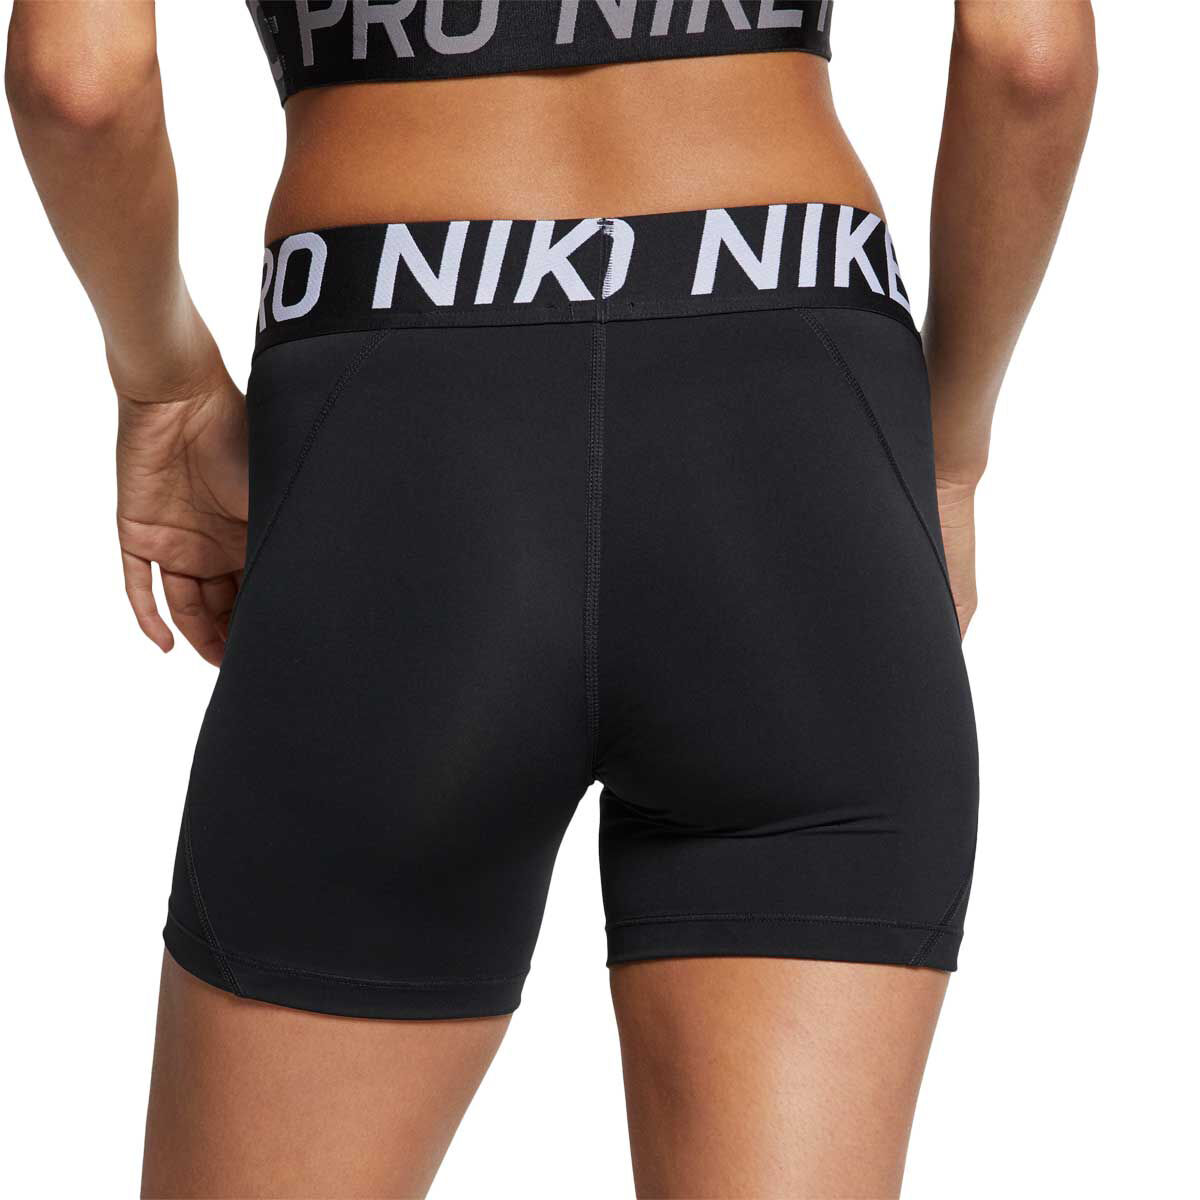 nike pro 5 inch compression shorts